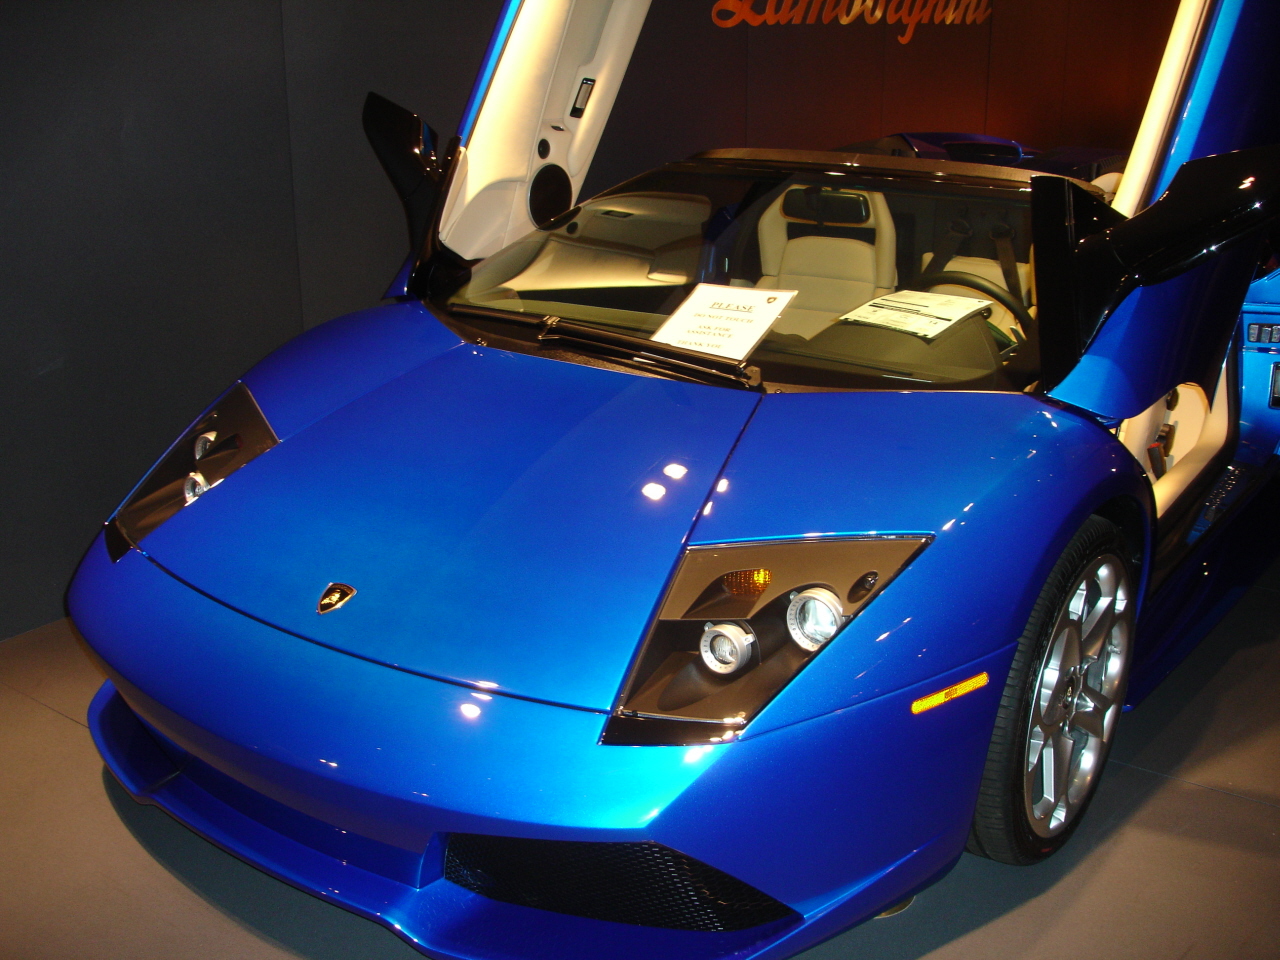 Visita al Museo Lamborghini Las Vegas/ Visit to Lamborghini Museum LasVegas-Lamborghini08.JPG